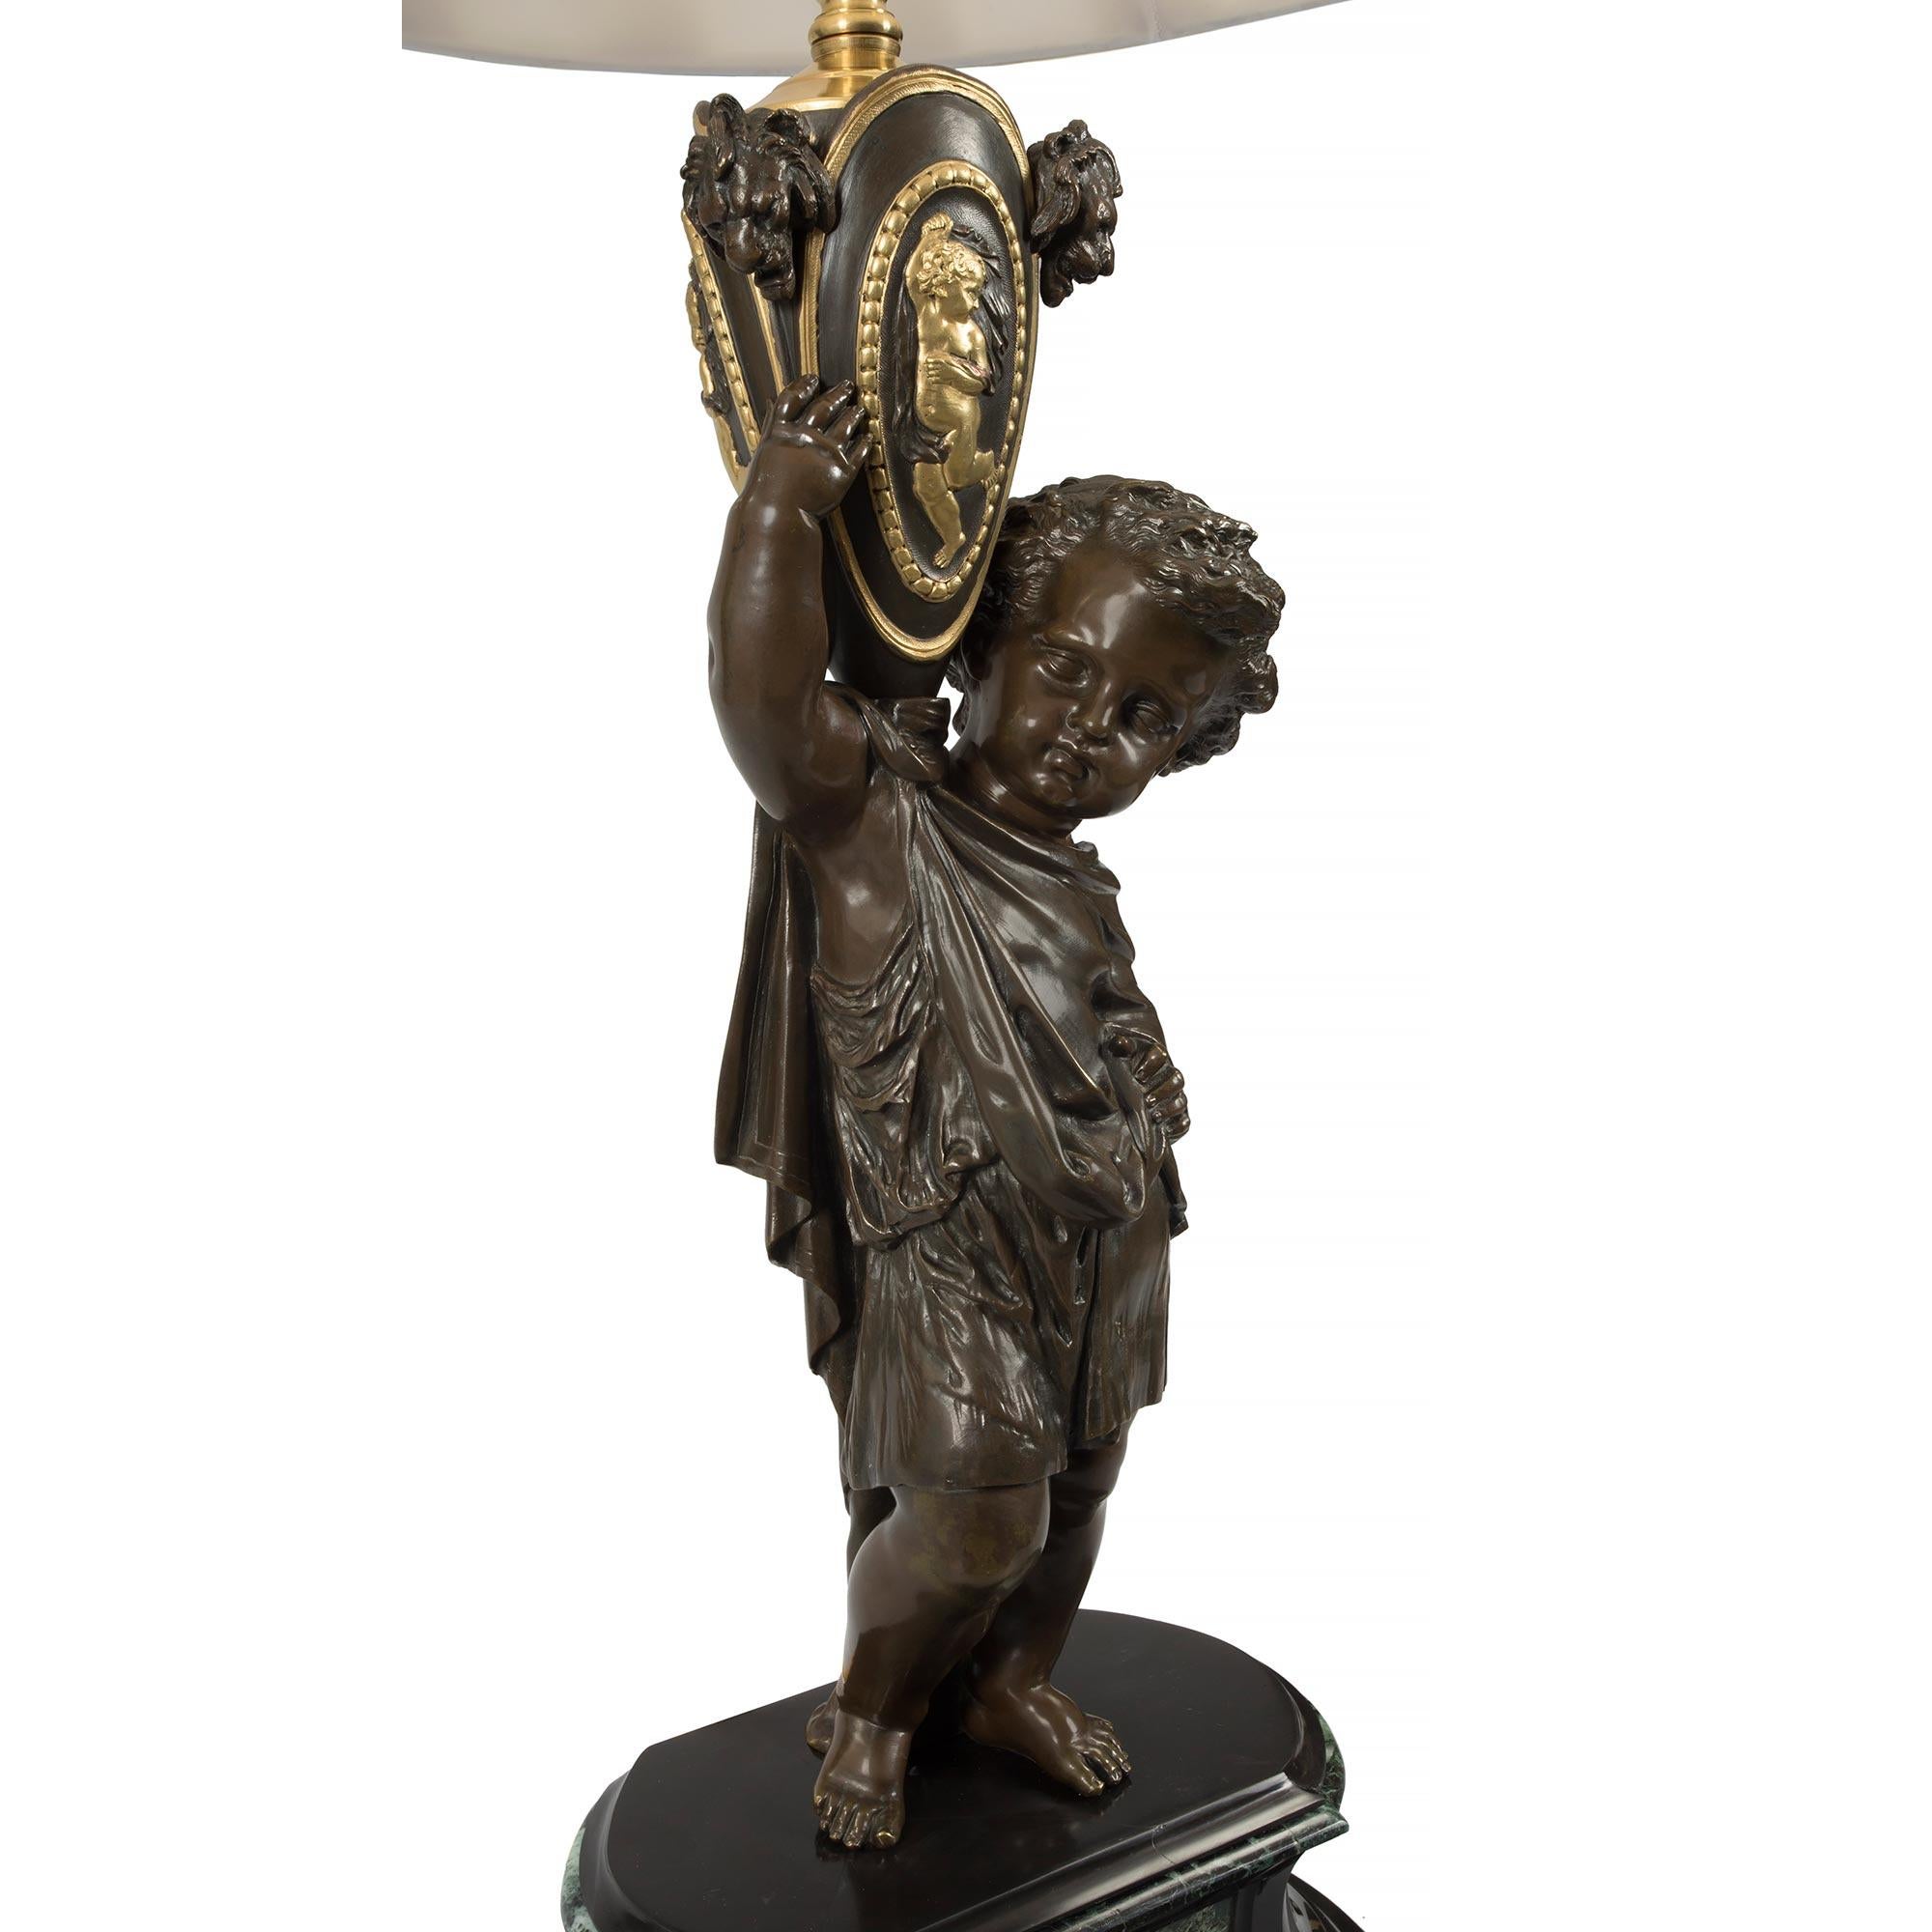 Pair of French 19th Century Louis XVI St. Belle Époque Period Lamps For Sale 1